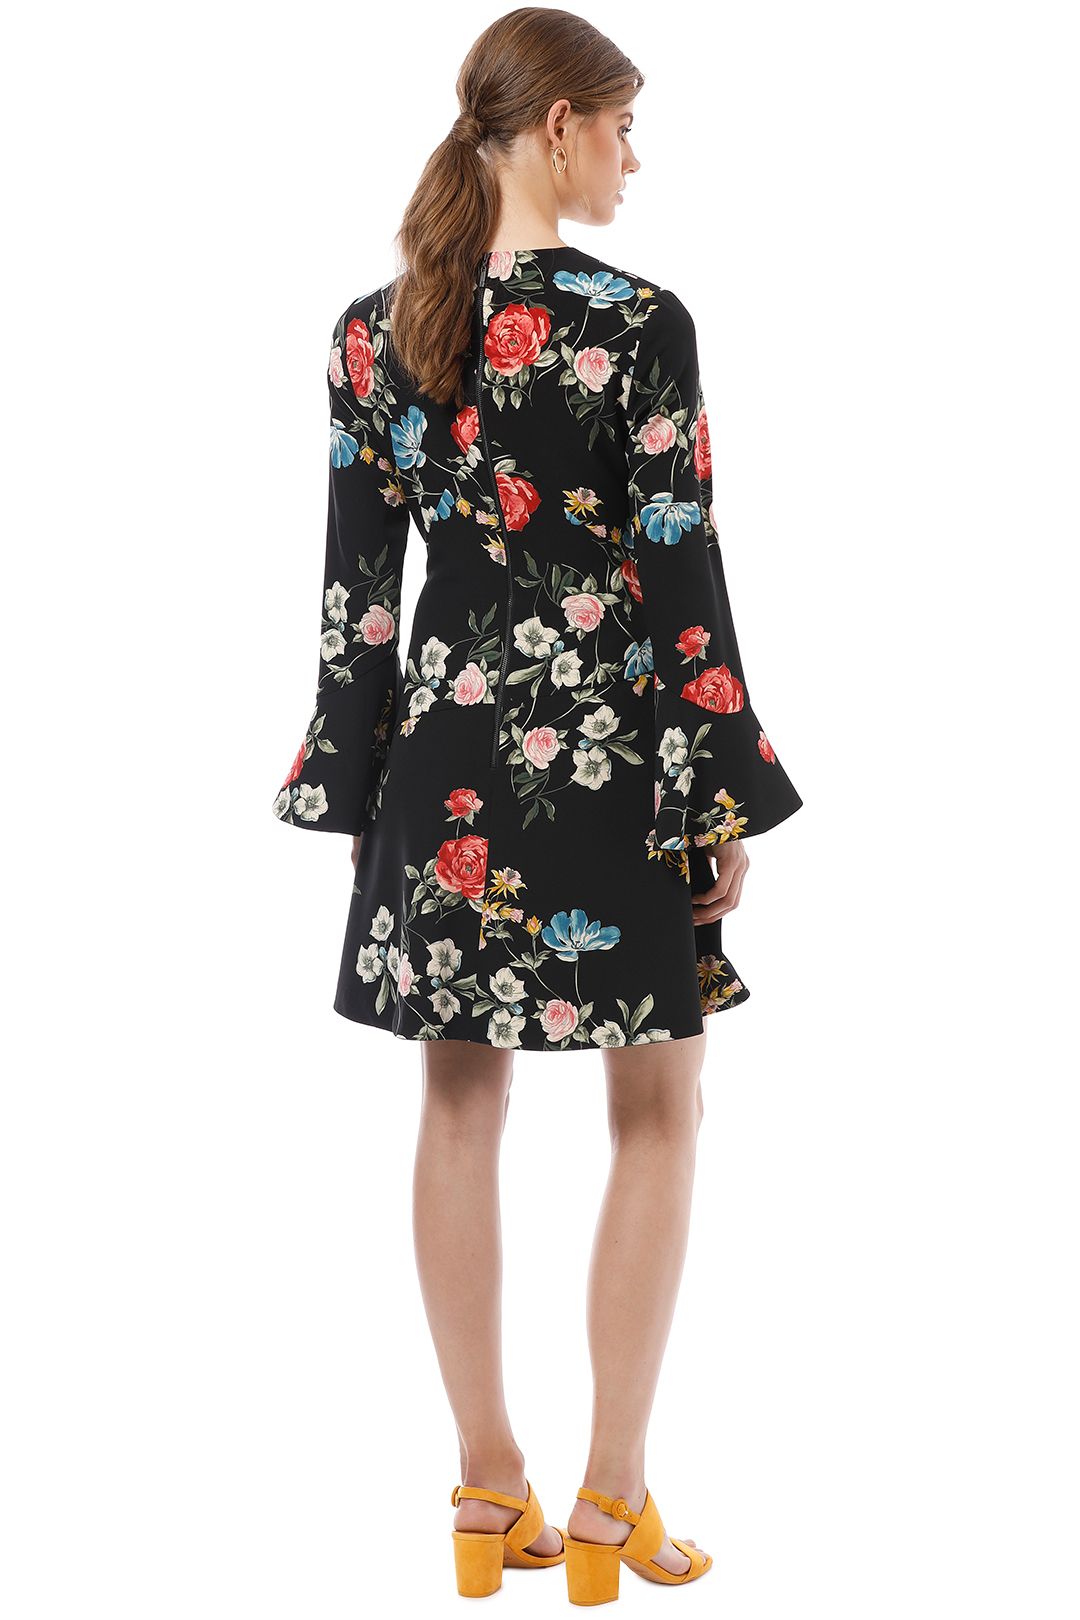 Cue - Watercolour Rose Long Sleeve Dress - Black Floral - Back